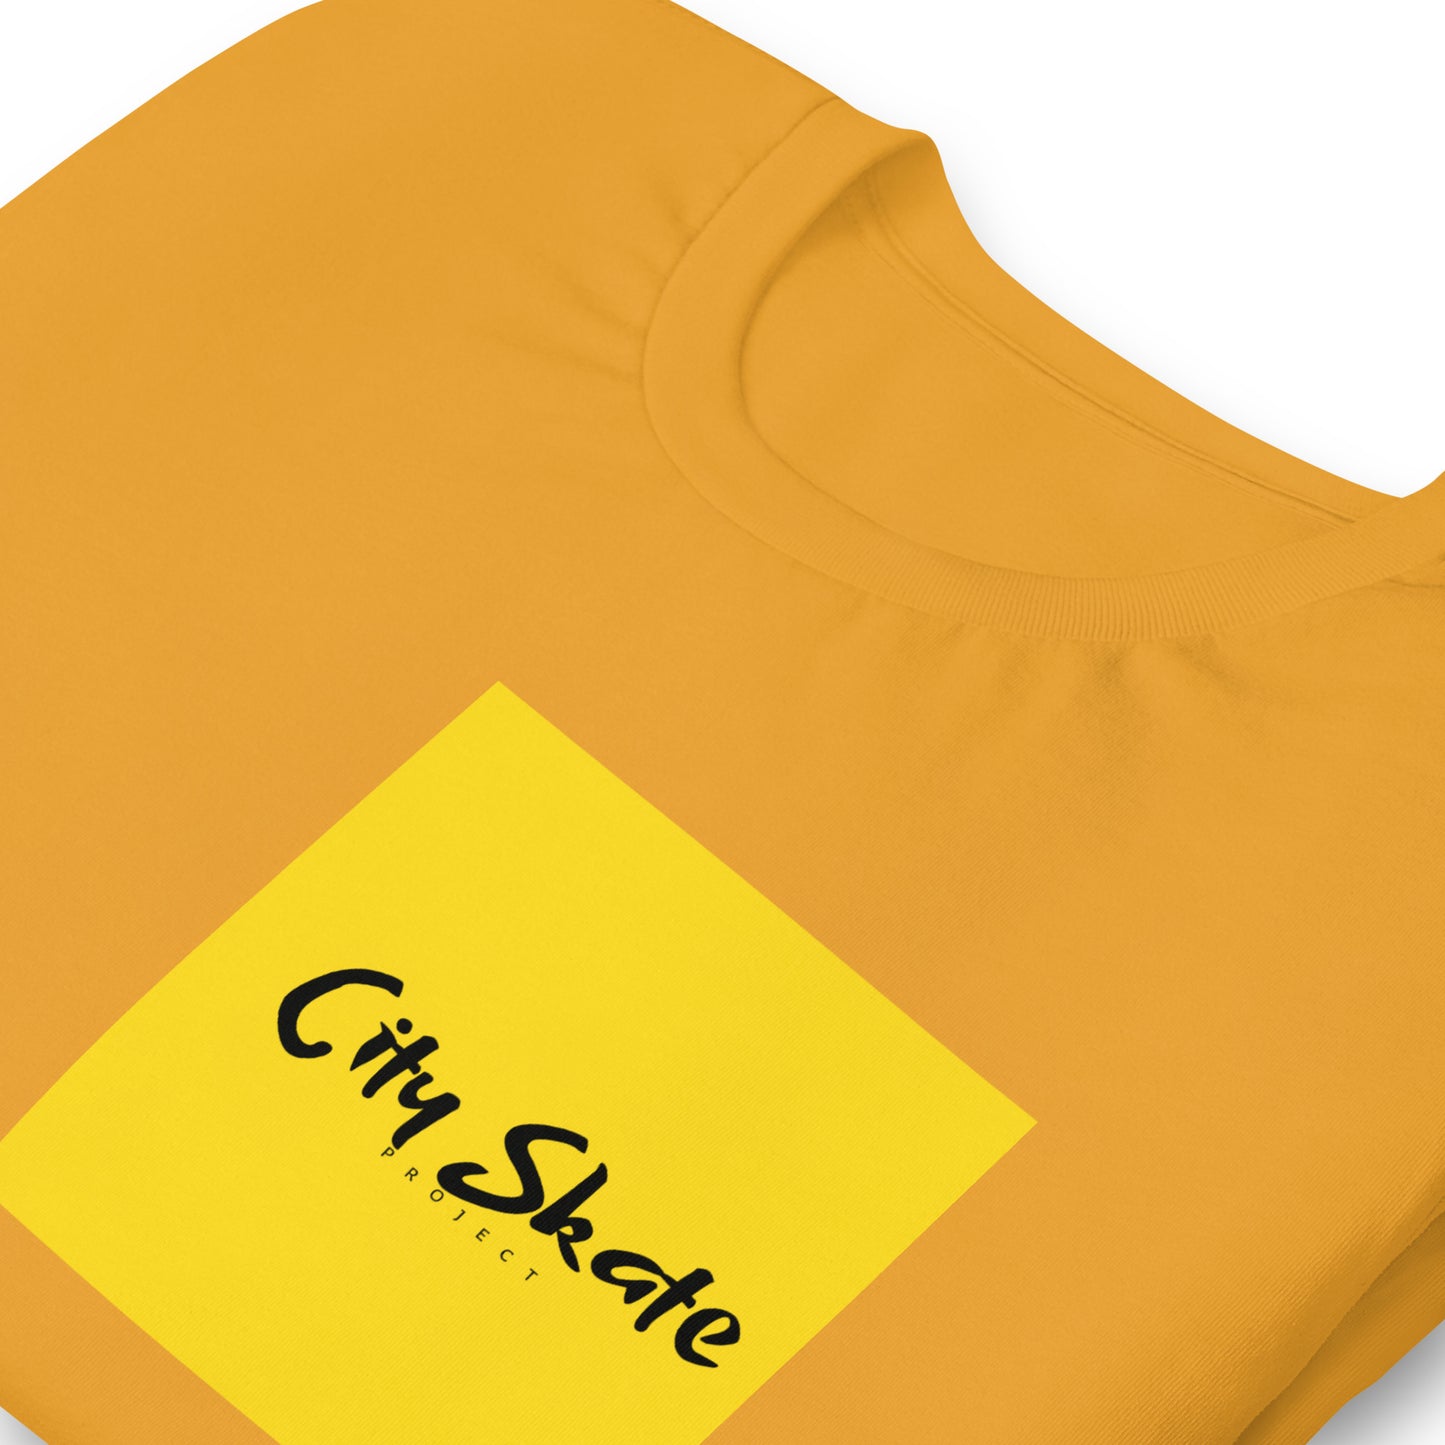 City Skate Project Yellow Brick Block Logo Unisex t-shirt